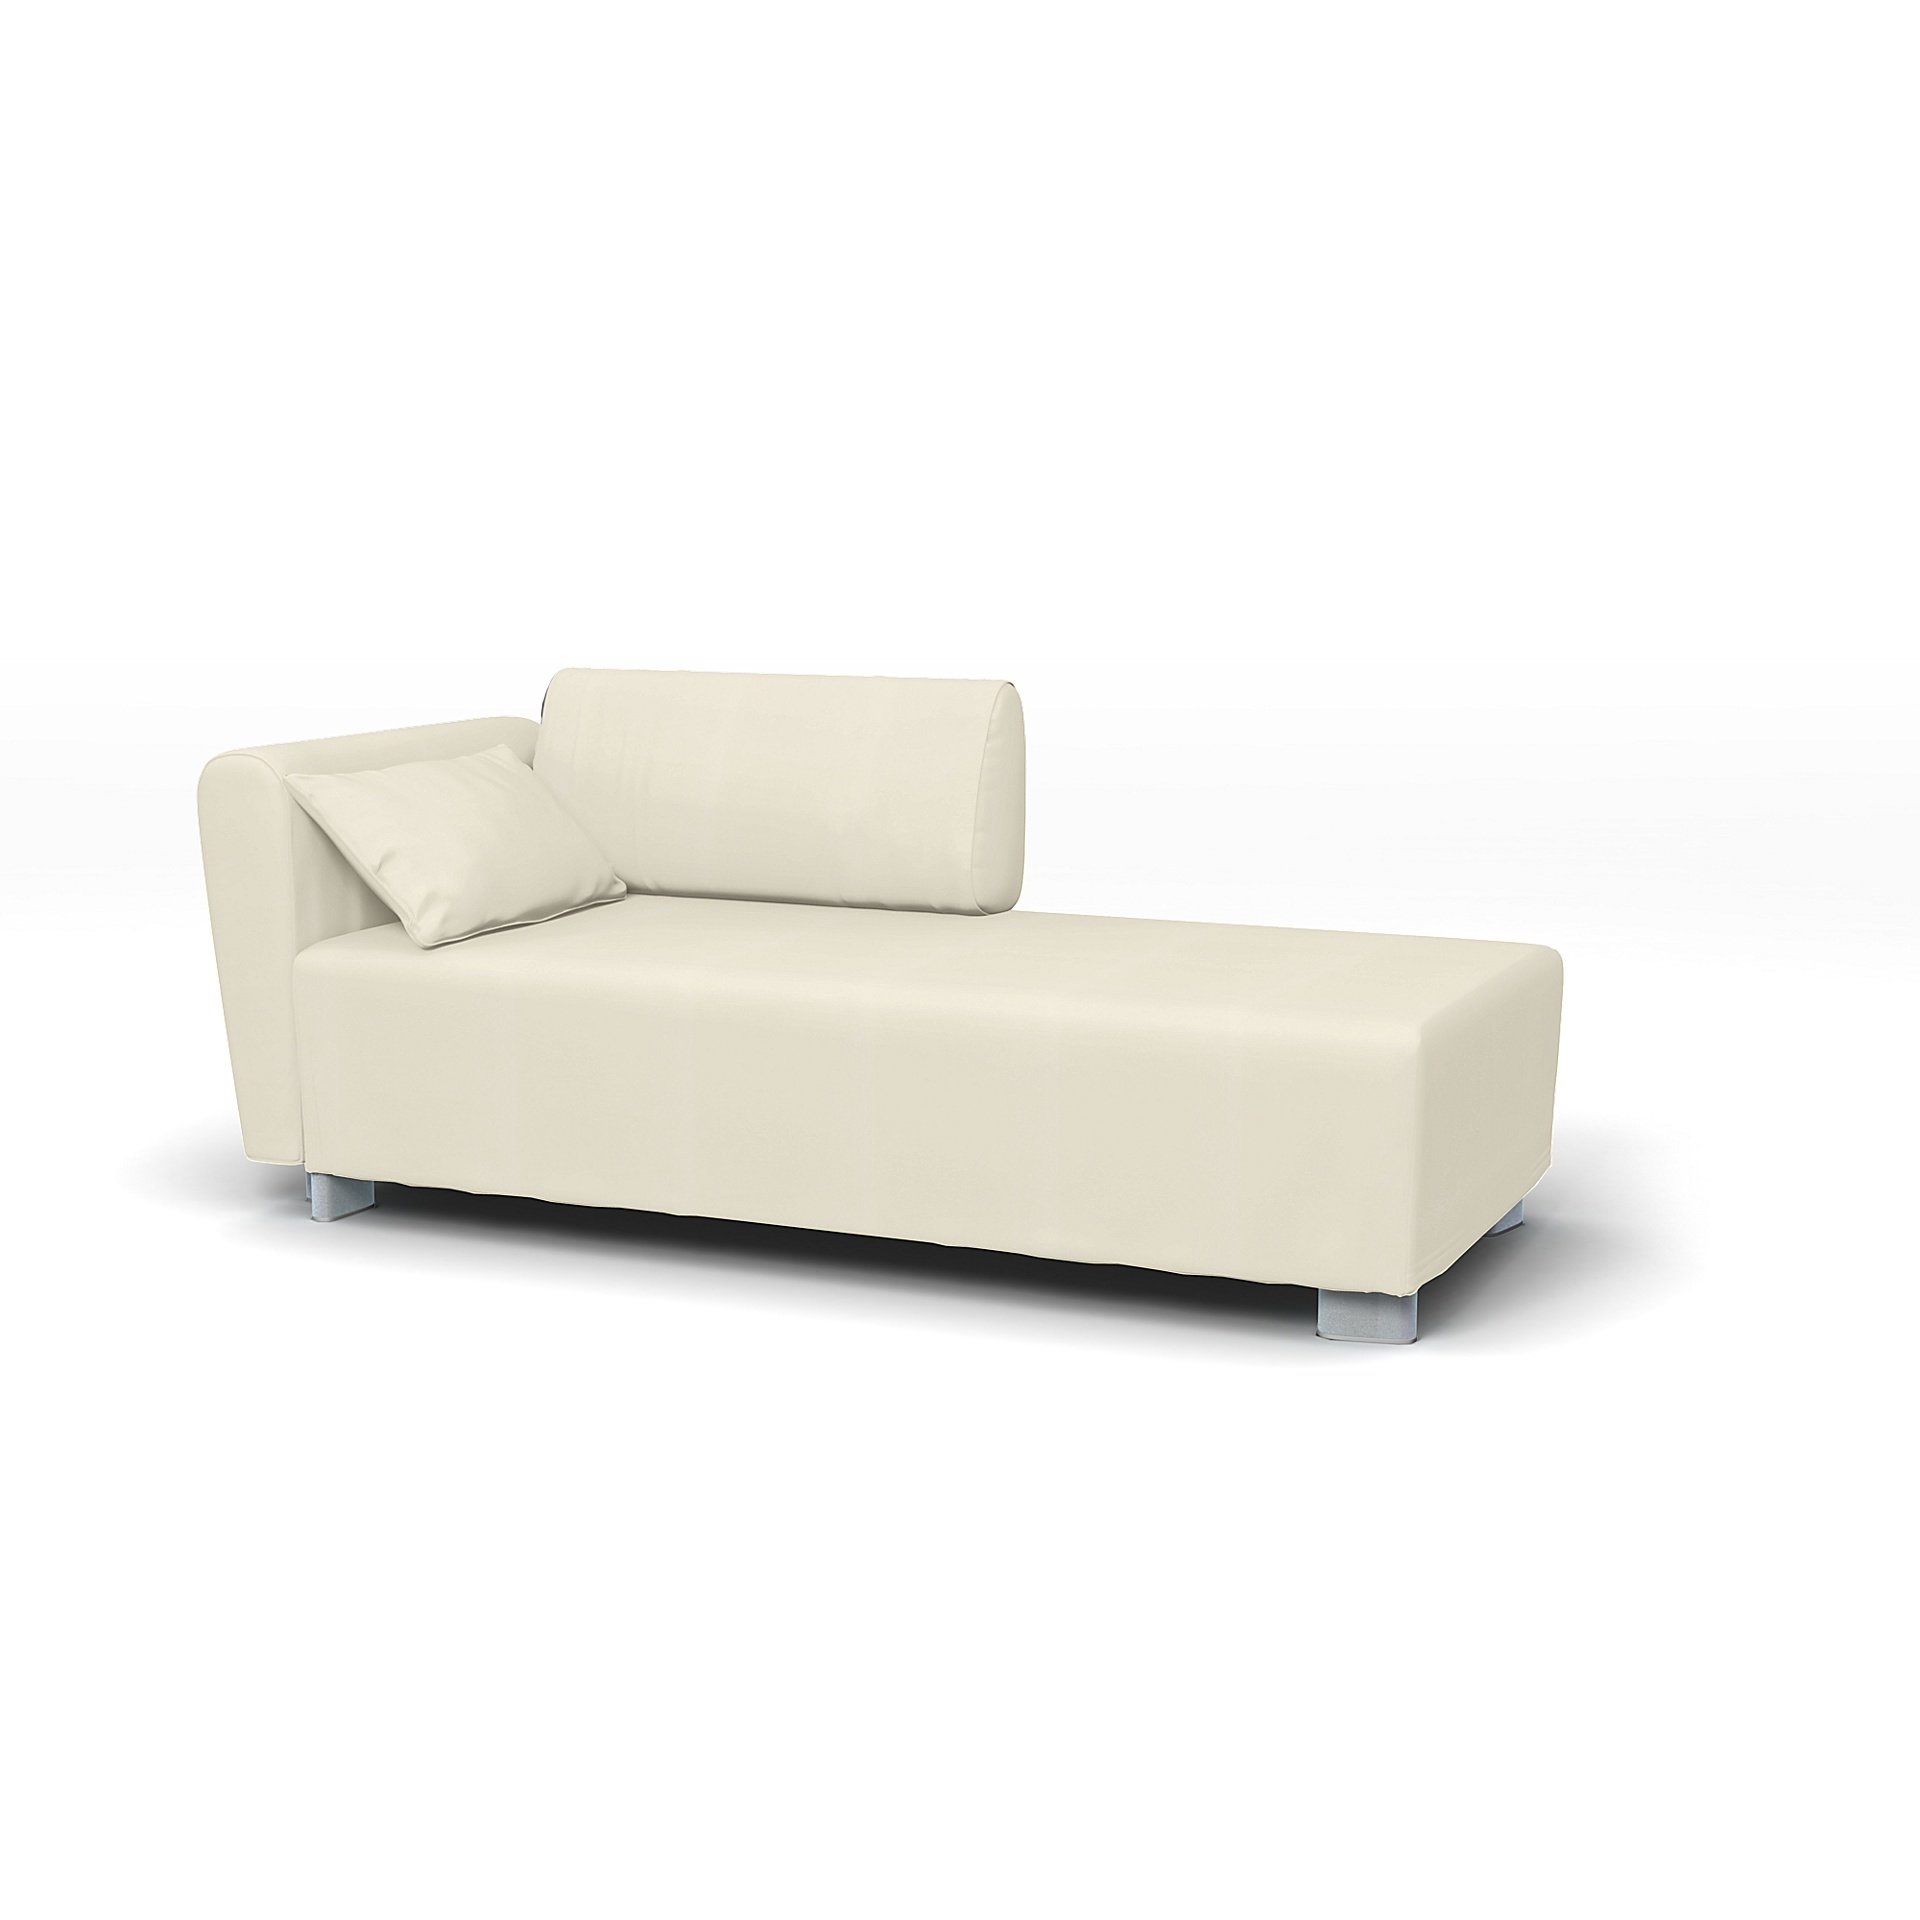 IKEA - Mysinge Chaise Longue with Armrest Cover, Tofu, Cotton - Bemz